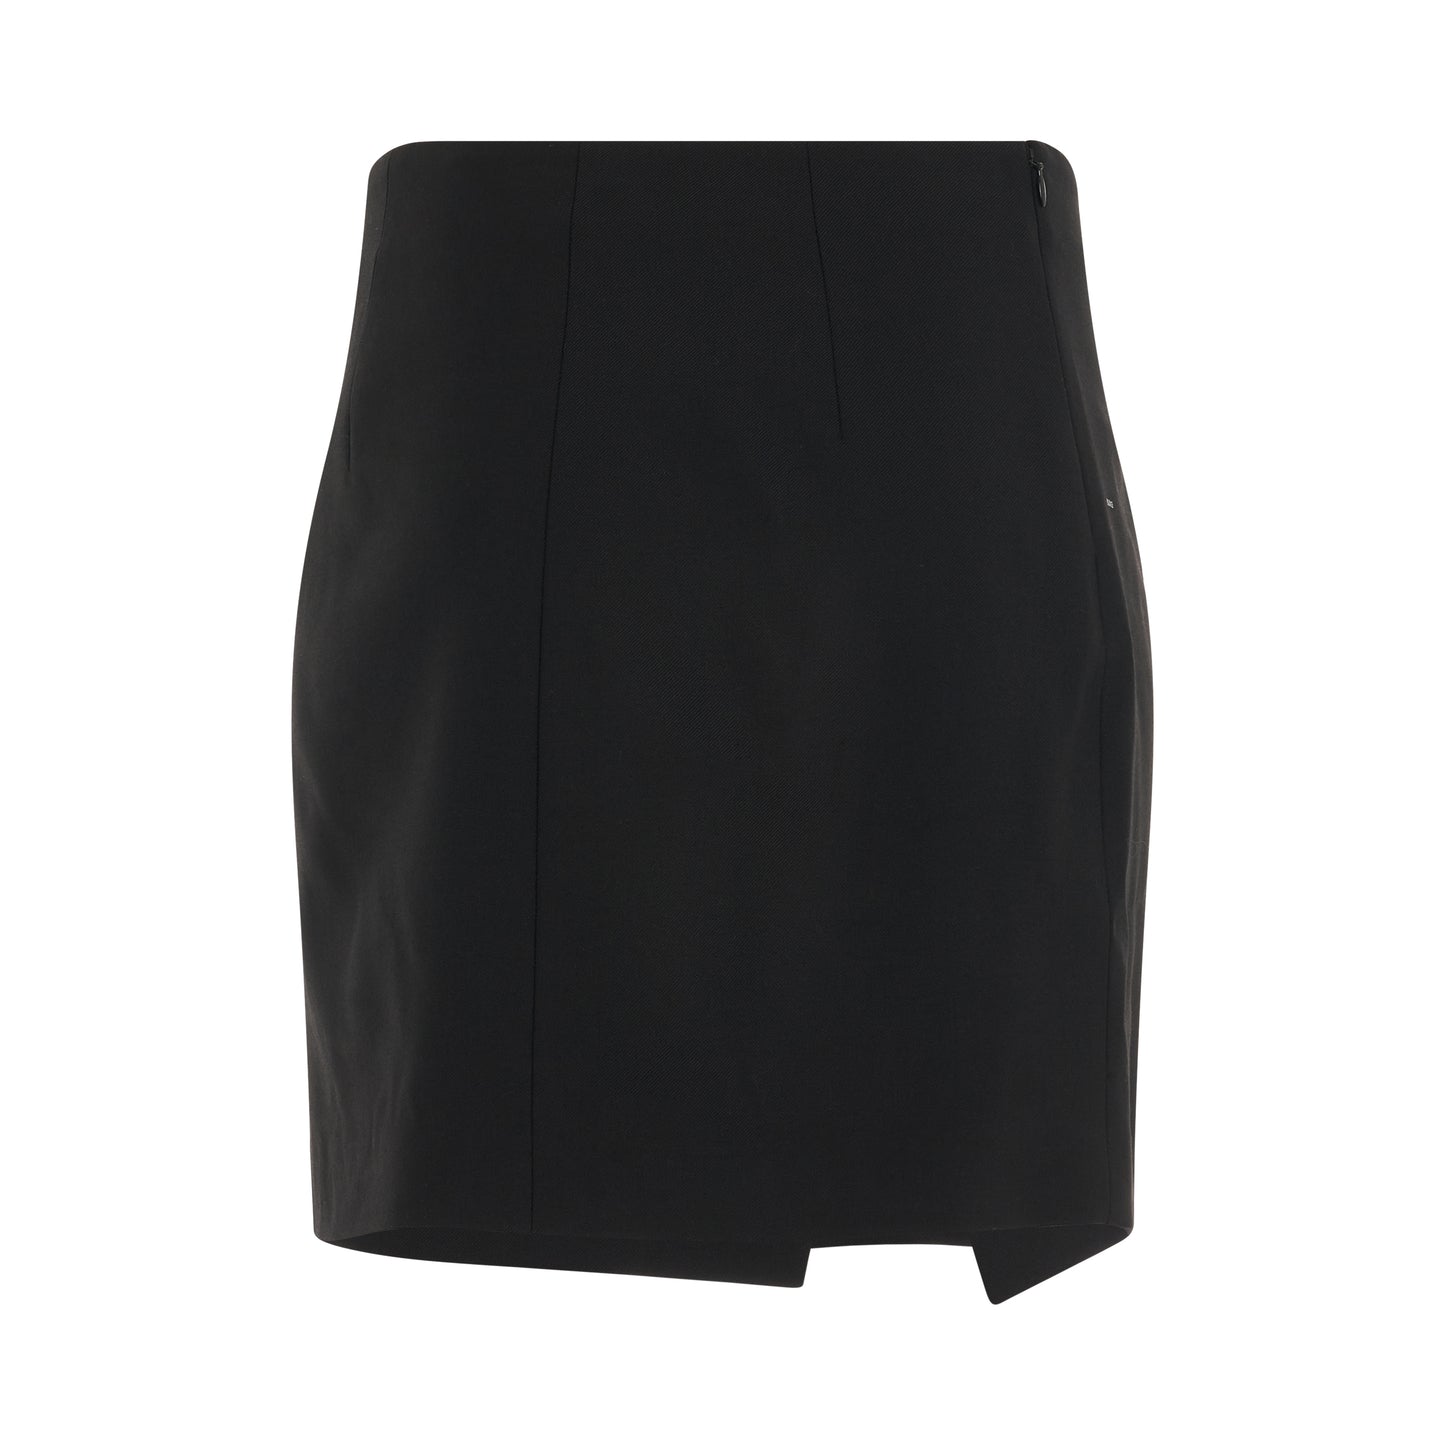 Corporate Tailored Mini Skirt in Black/White